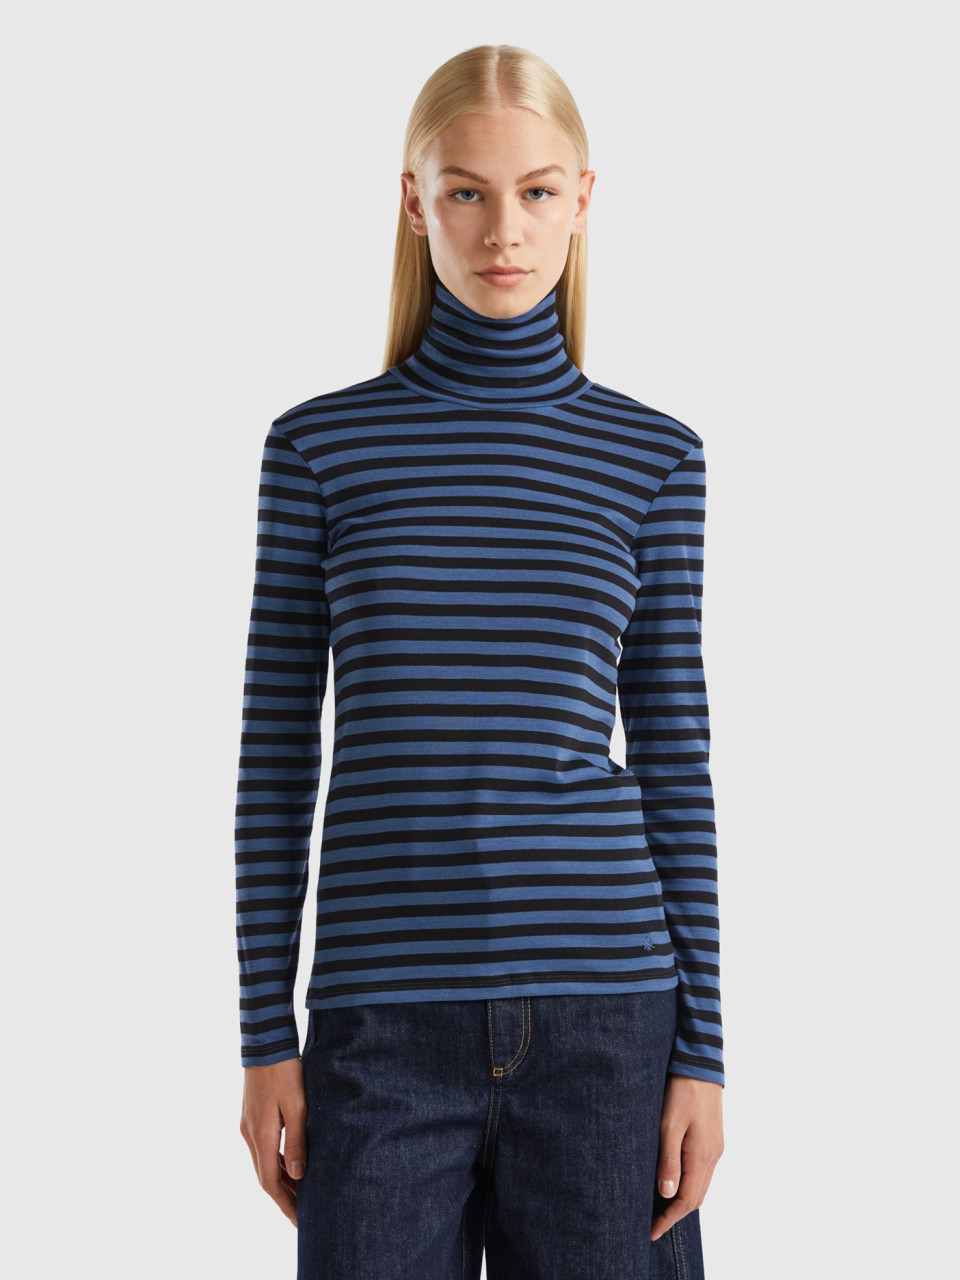 Benetton, Striped Turtleneck T-shirt, Blue, Women